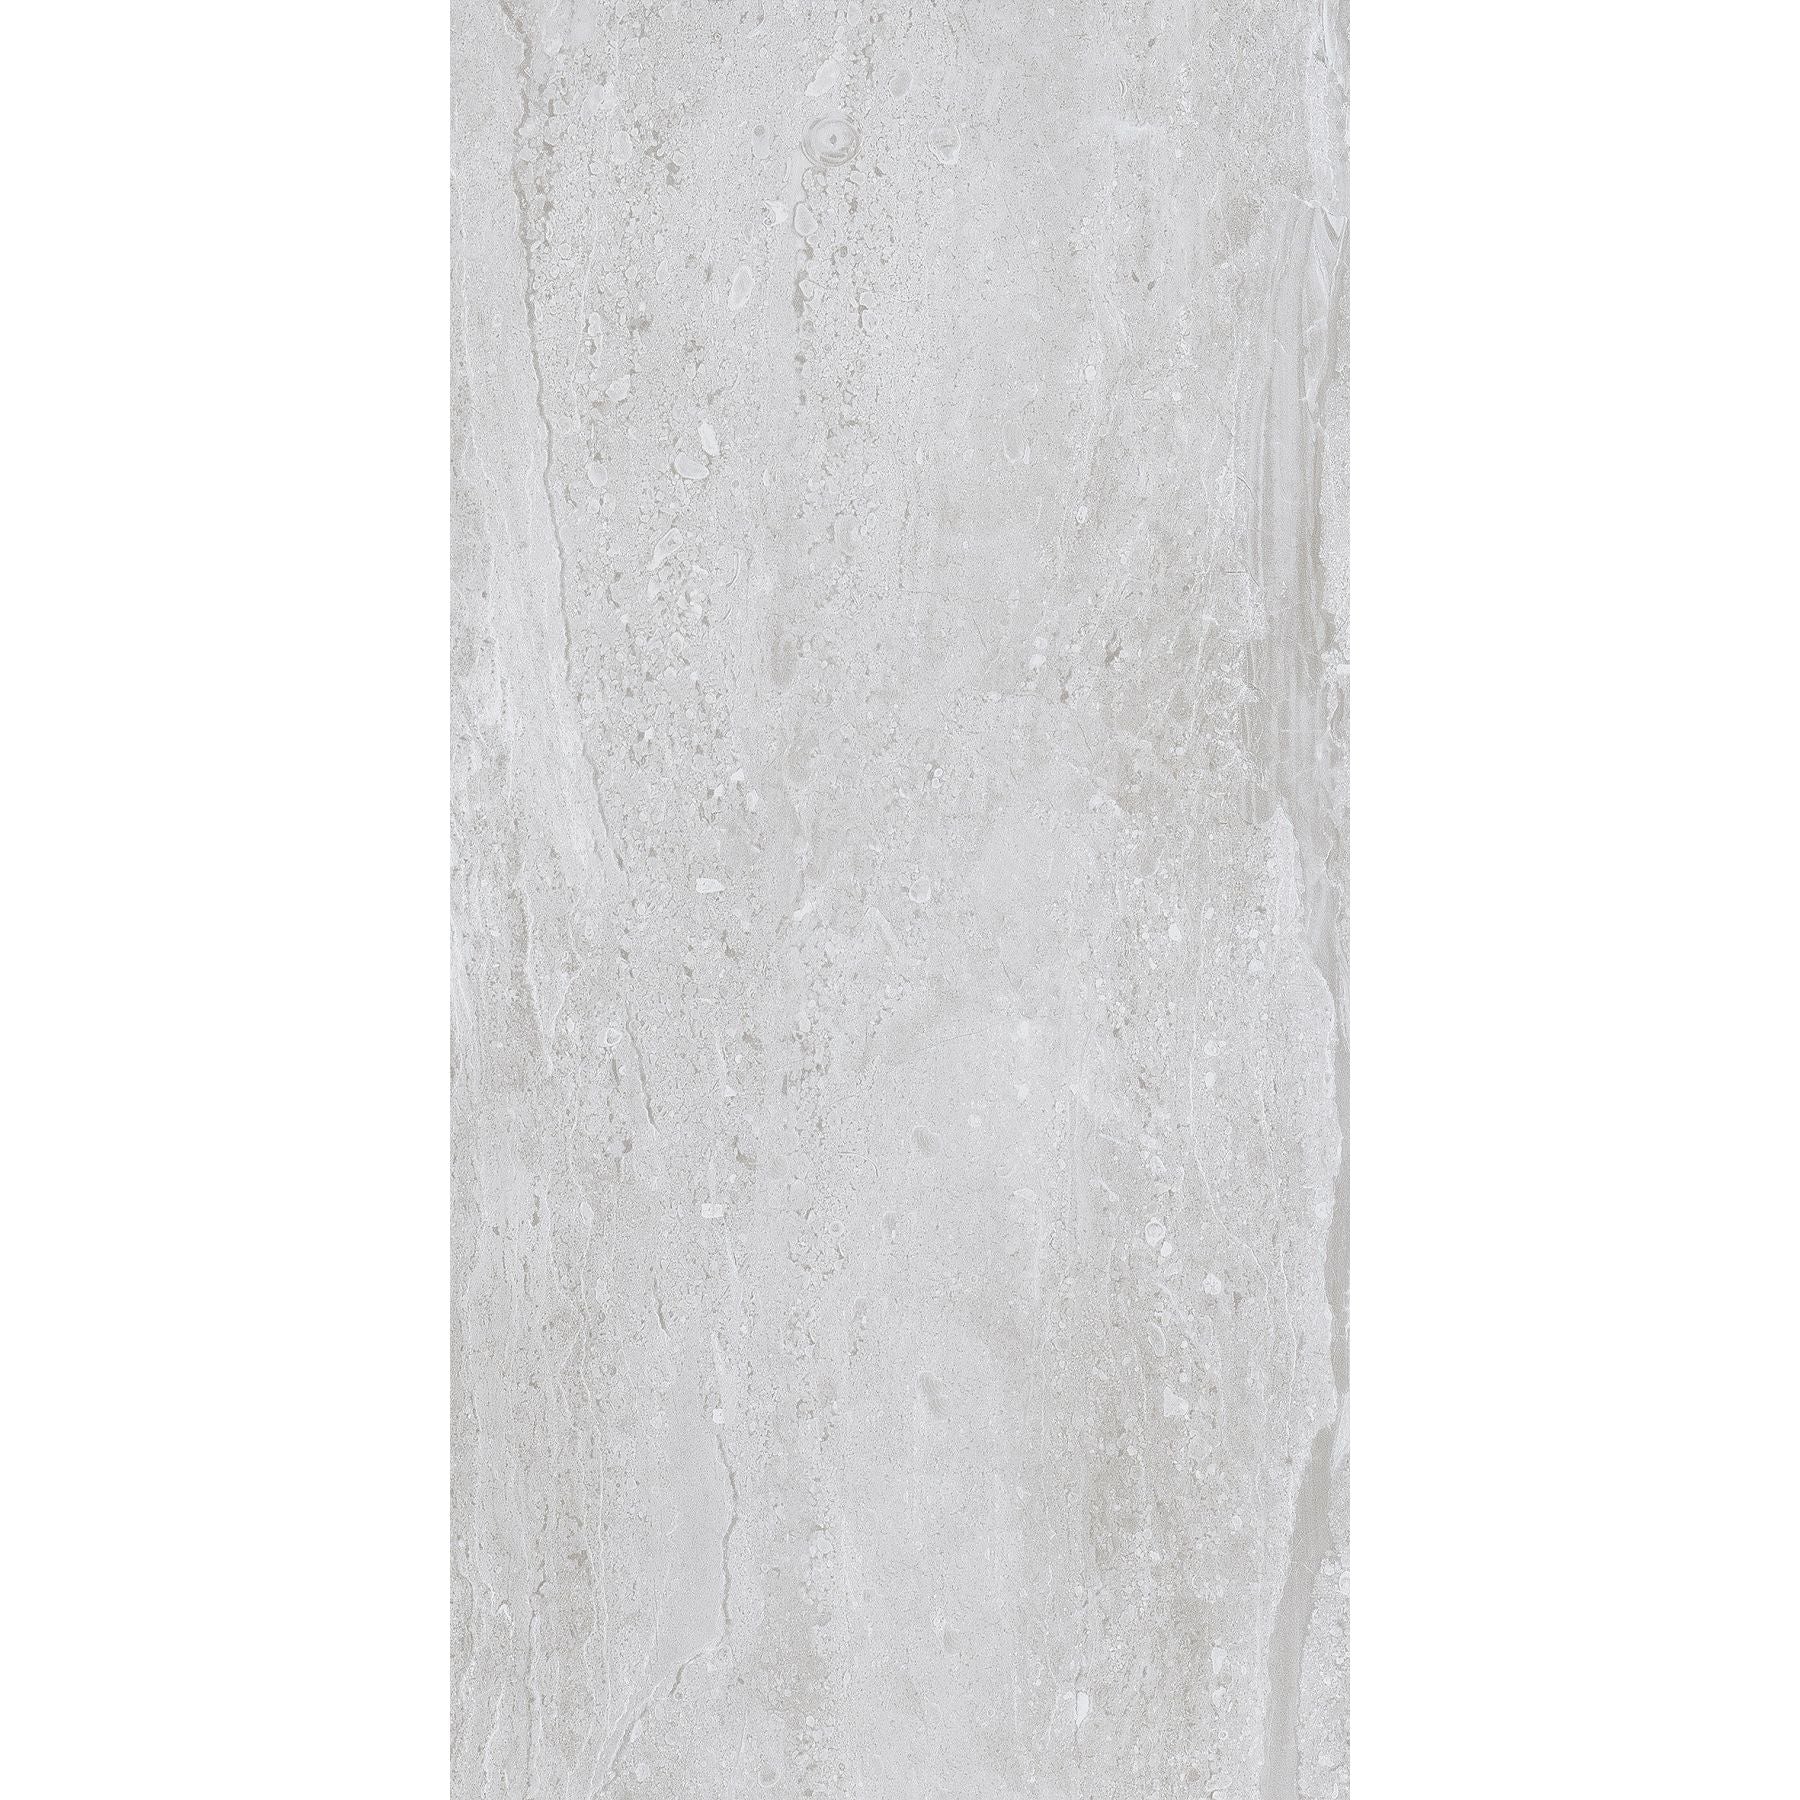 Santino Light Grey Ceramic Wall Tile - 30 x 60cm